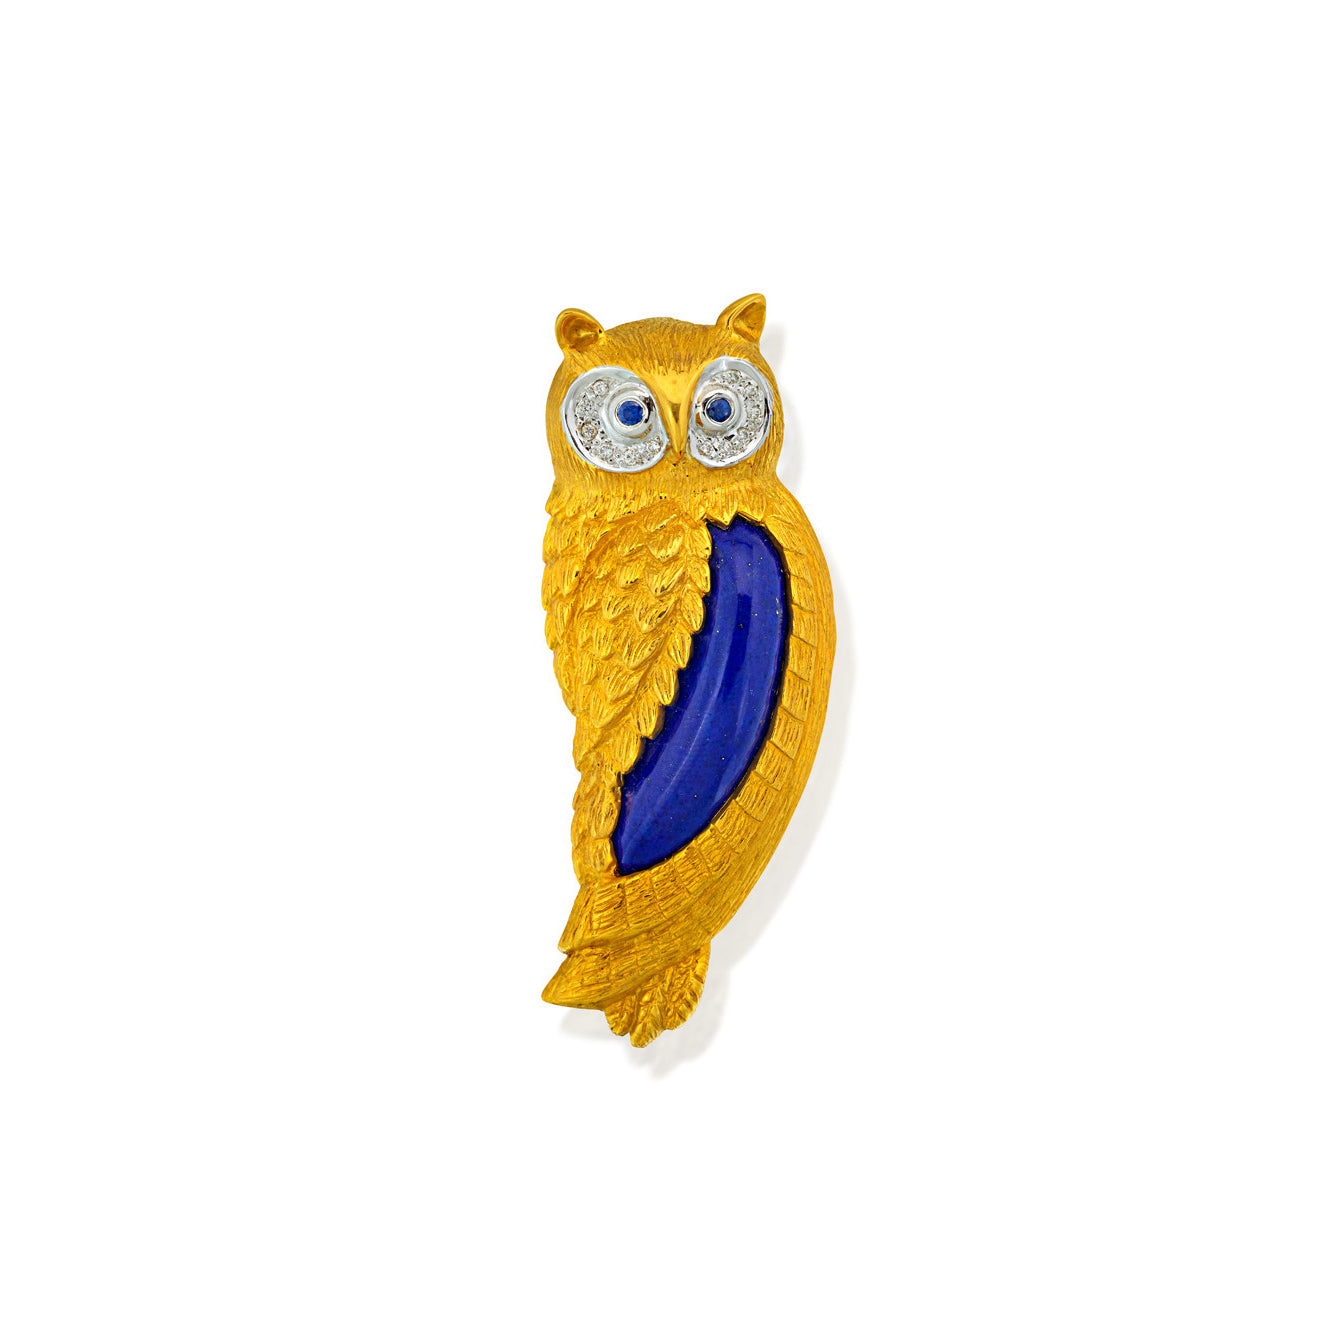 Alopa 1970s 18KT Yellow Gold Lapis Lazuli & Diamond Owl Brooch front